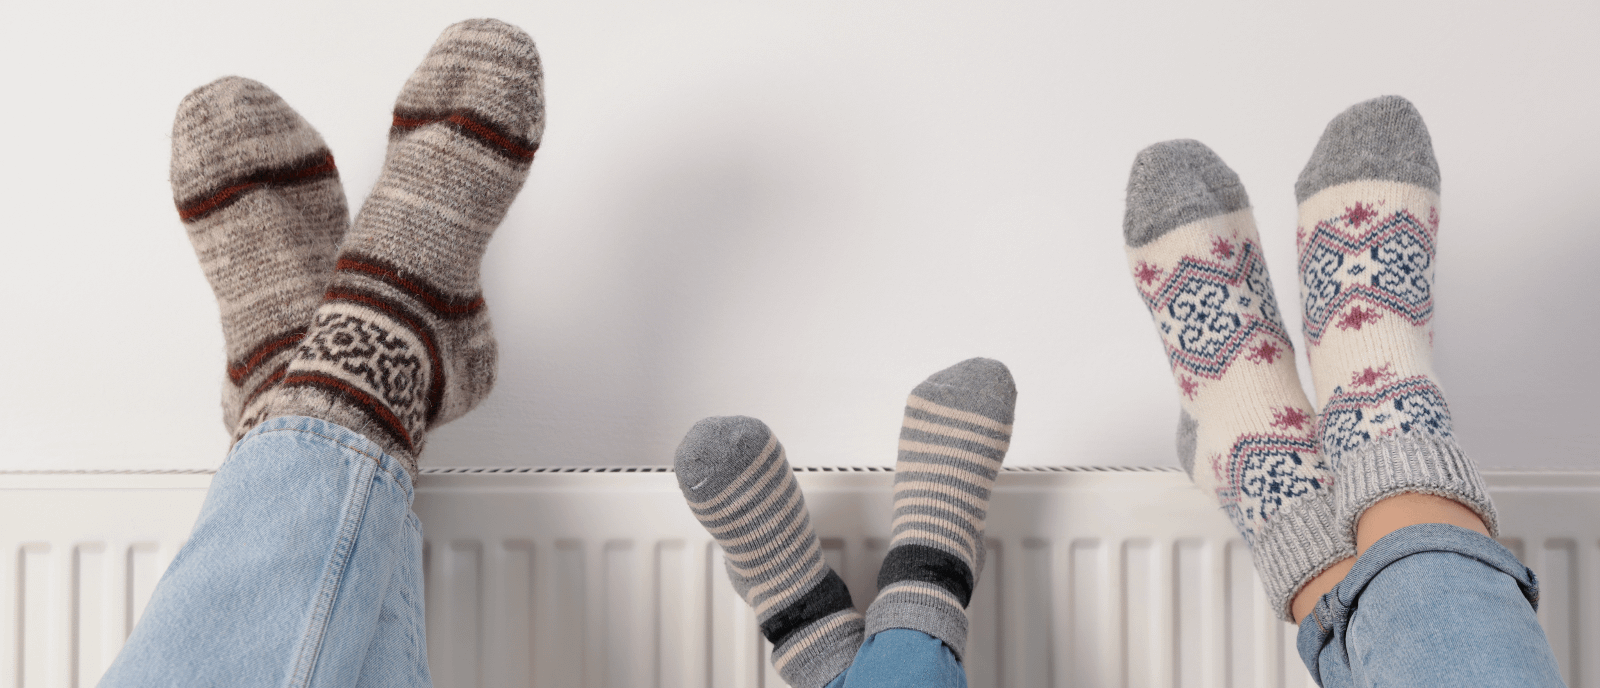 Family feet with winter socks warming on a radiator